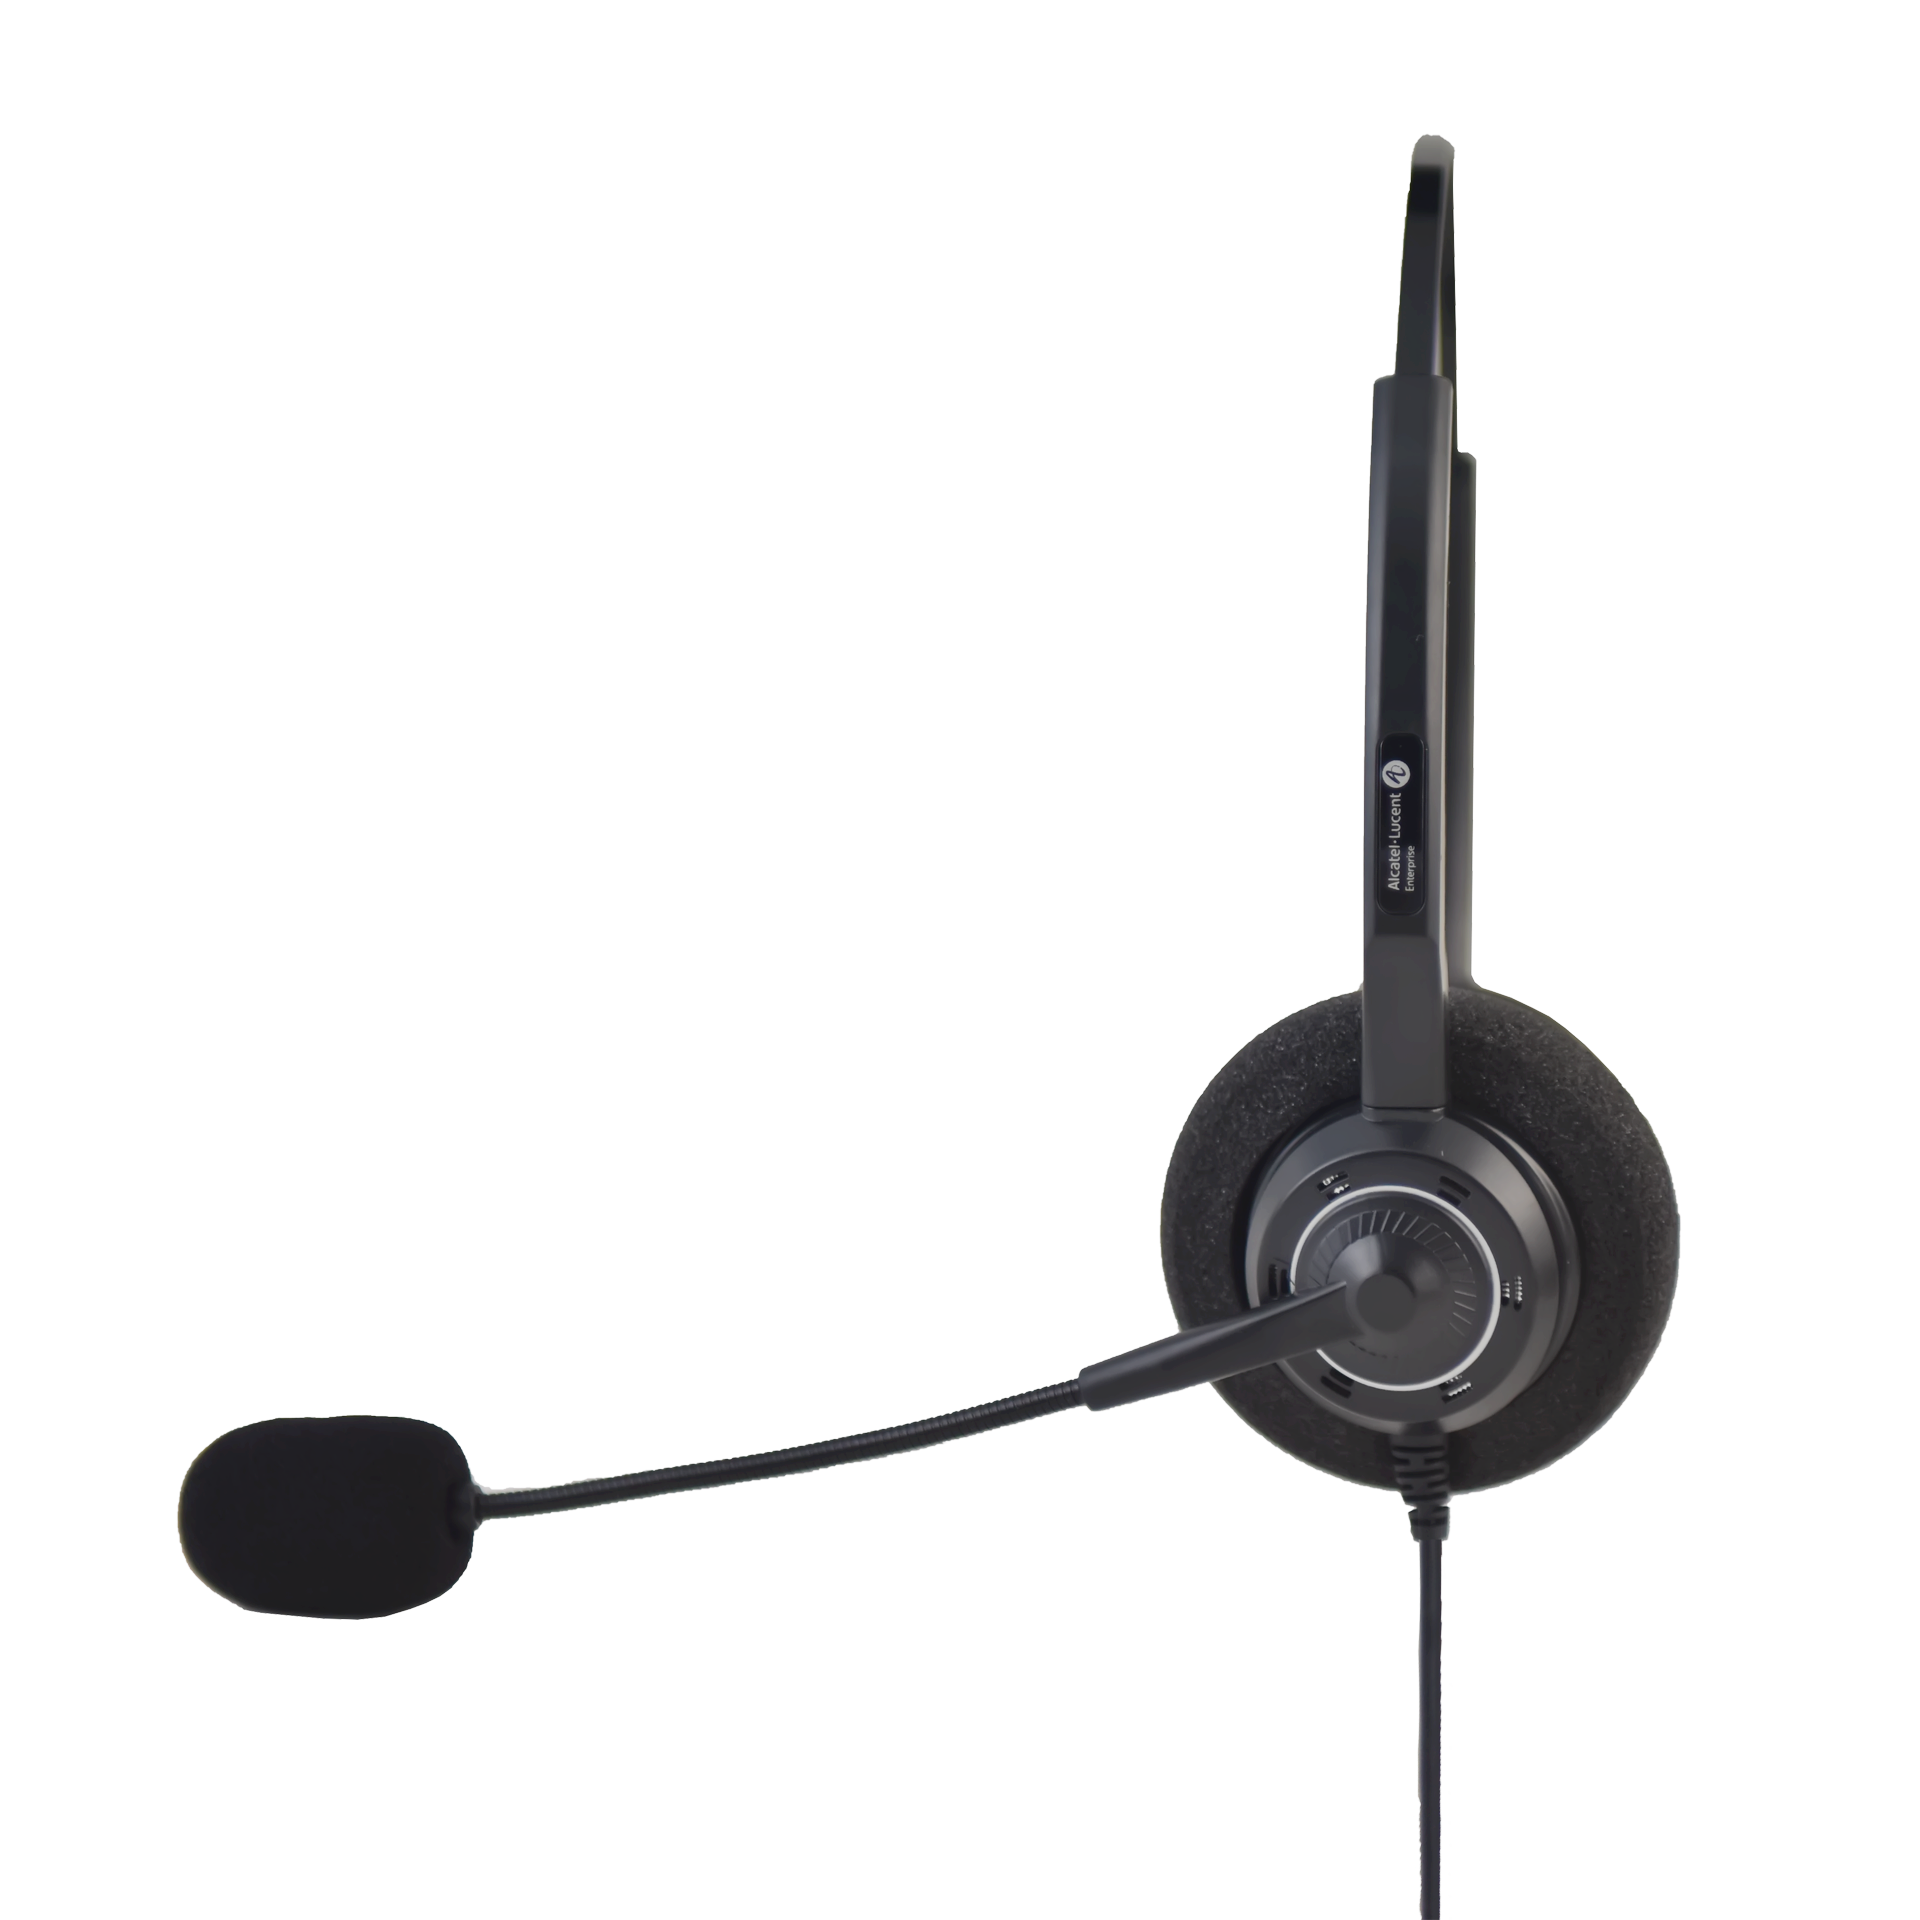 High-qualitynotion Speakers, Focus On Voice Frequency To Improve Voice Quality AH 12 U Professional USB Headset